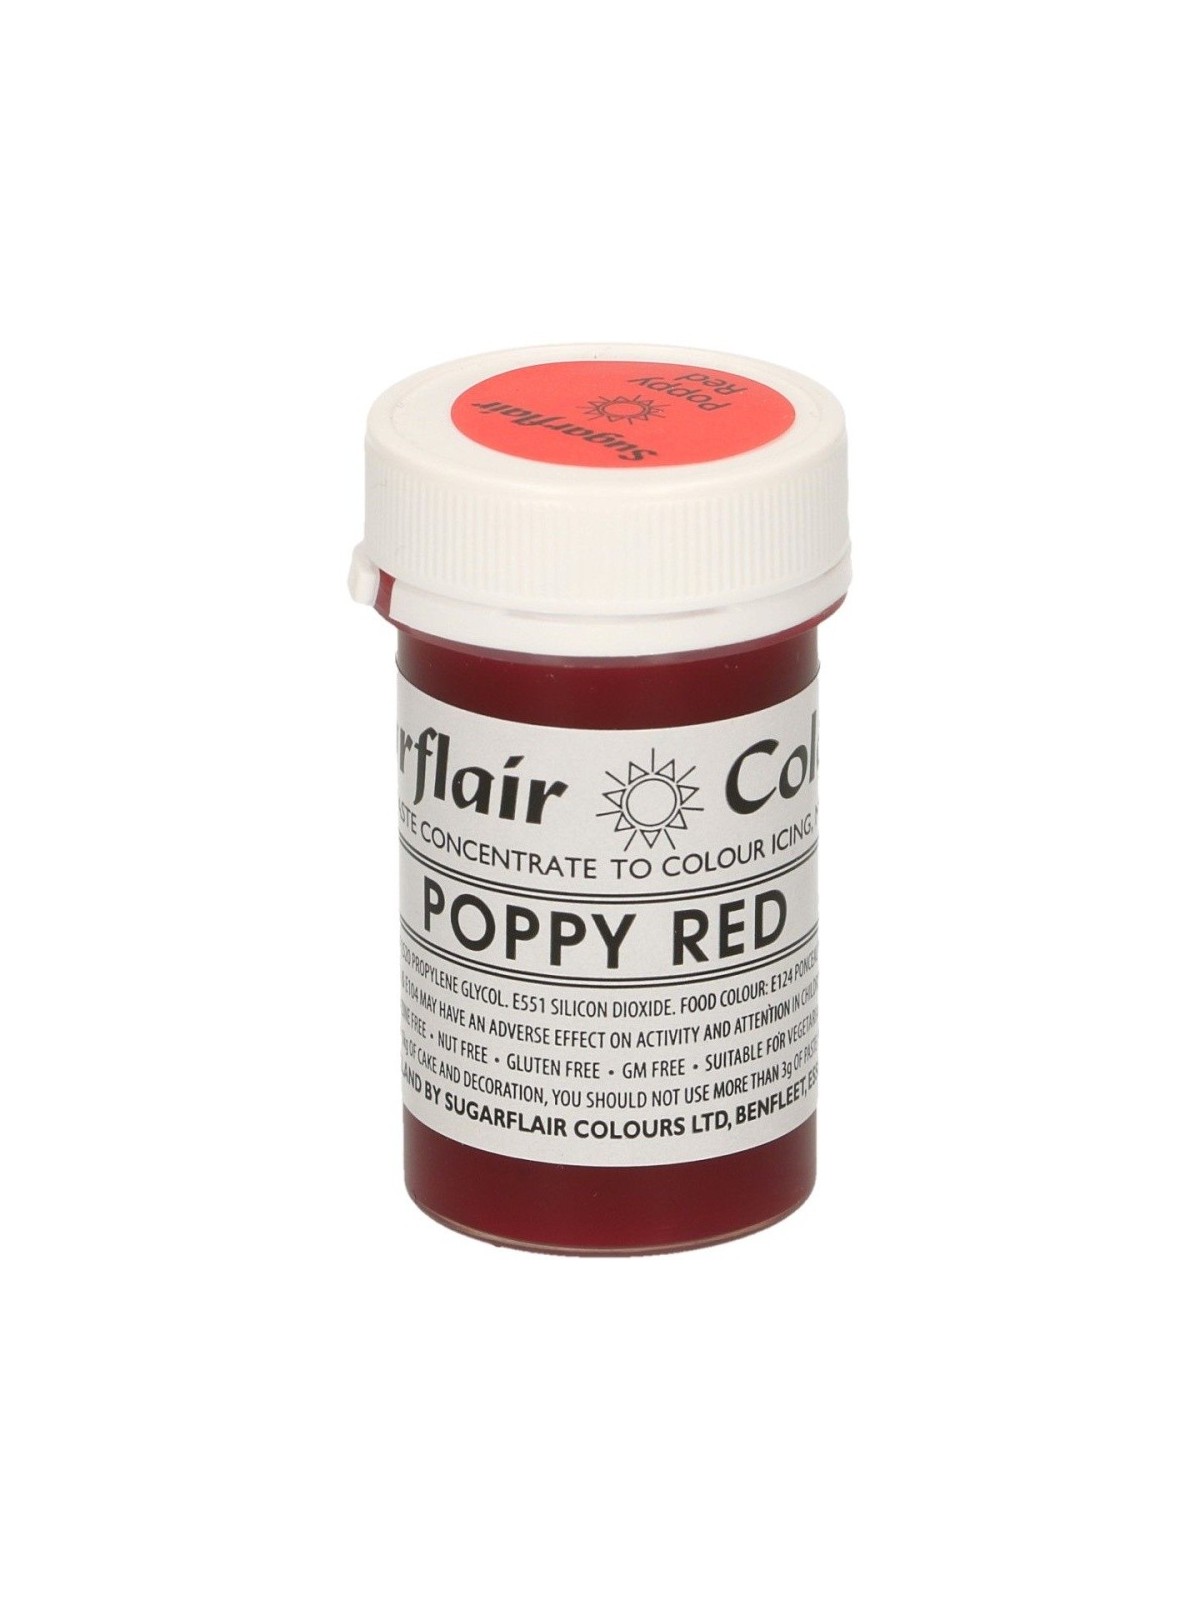 Sugarflair Paste colour - Poppy red - 25g